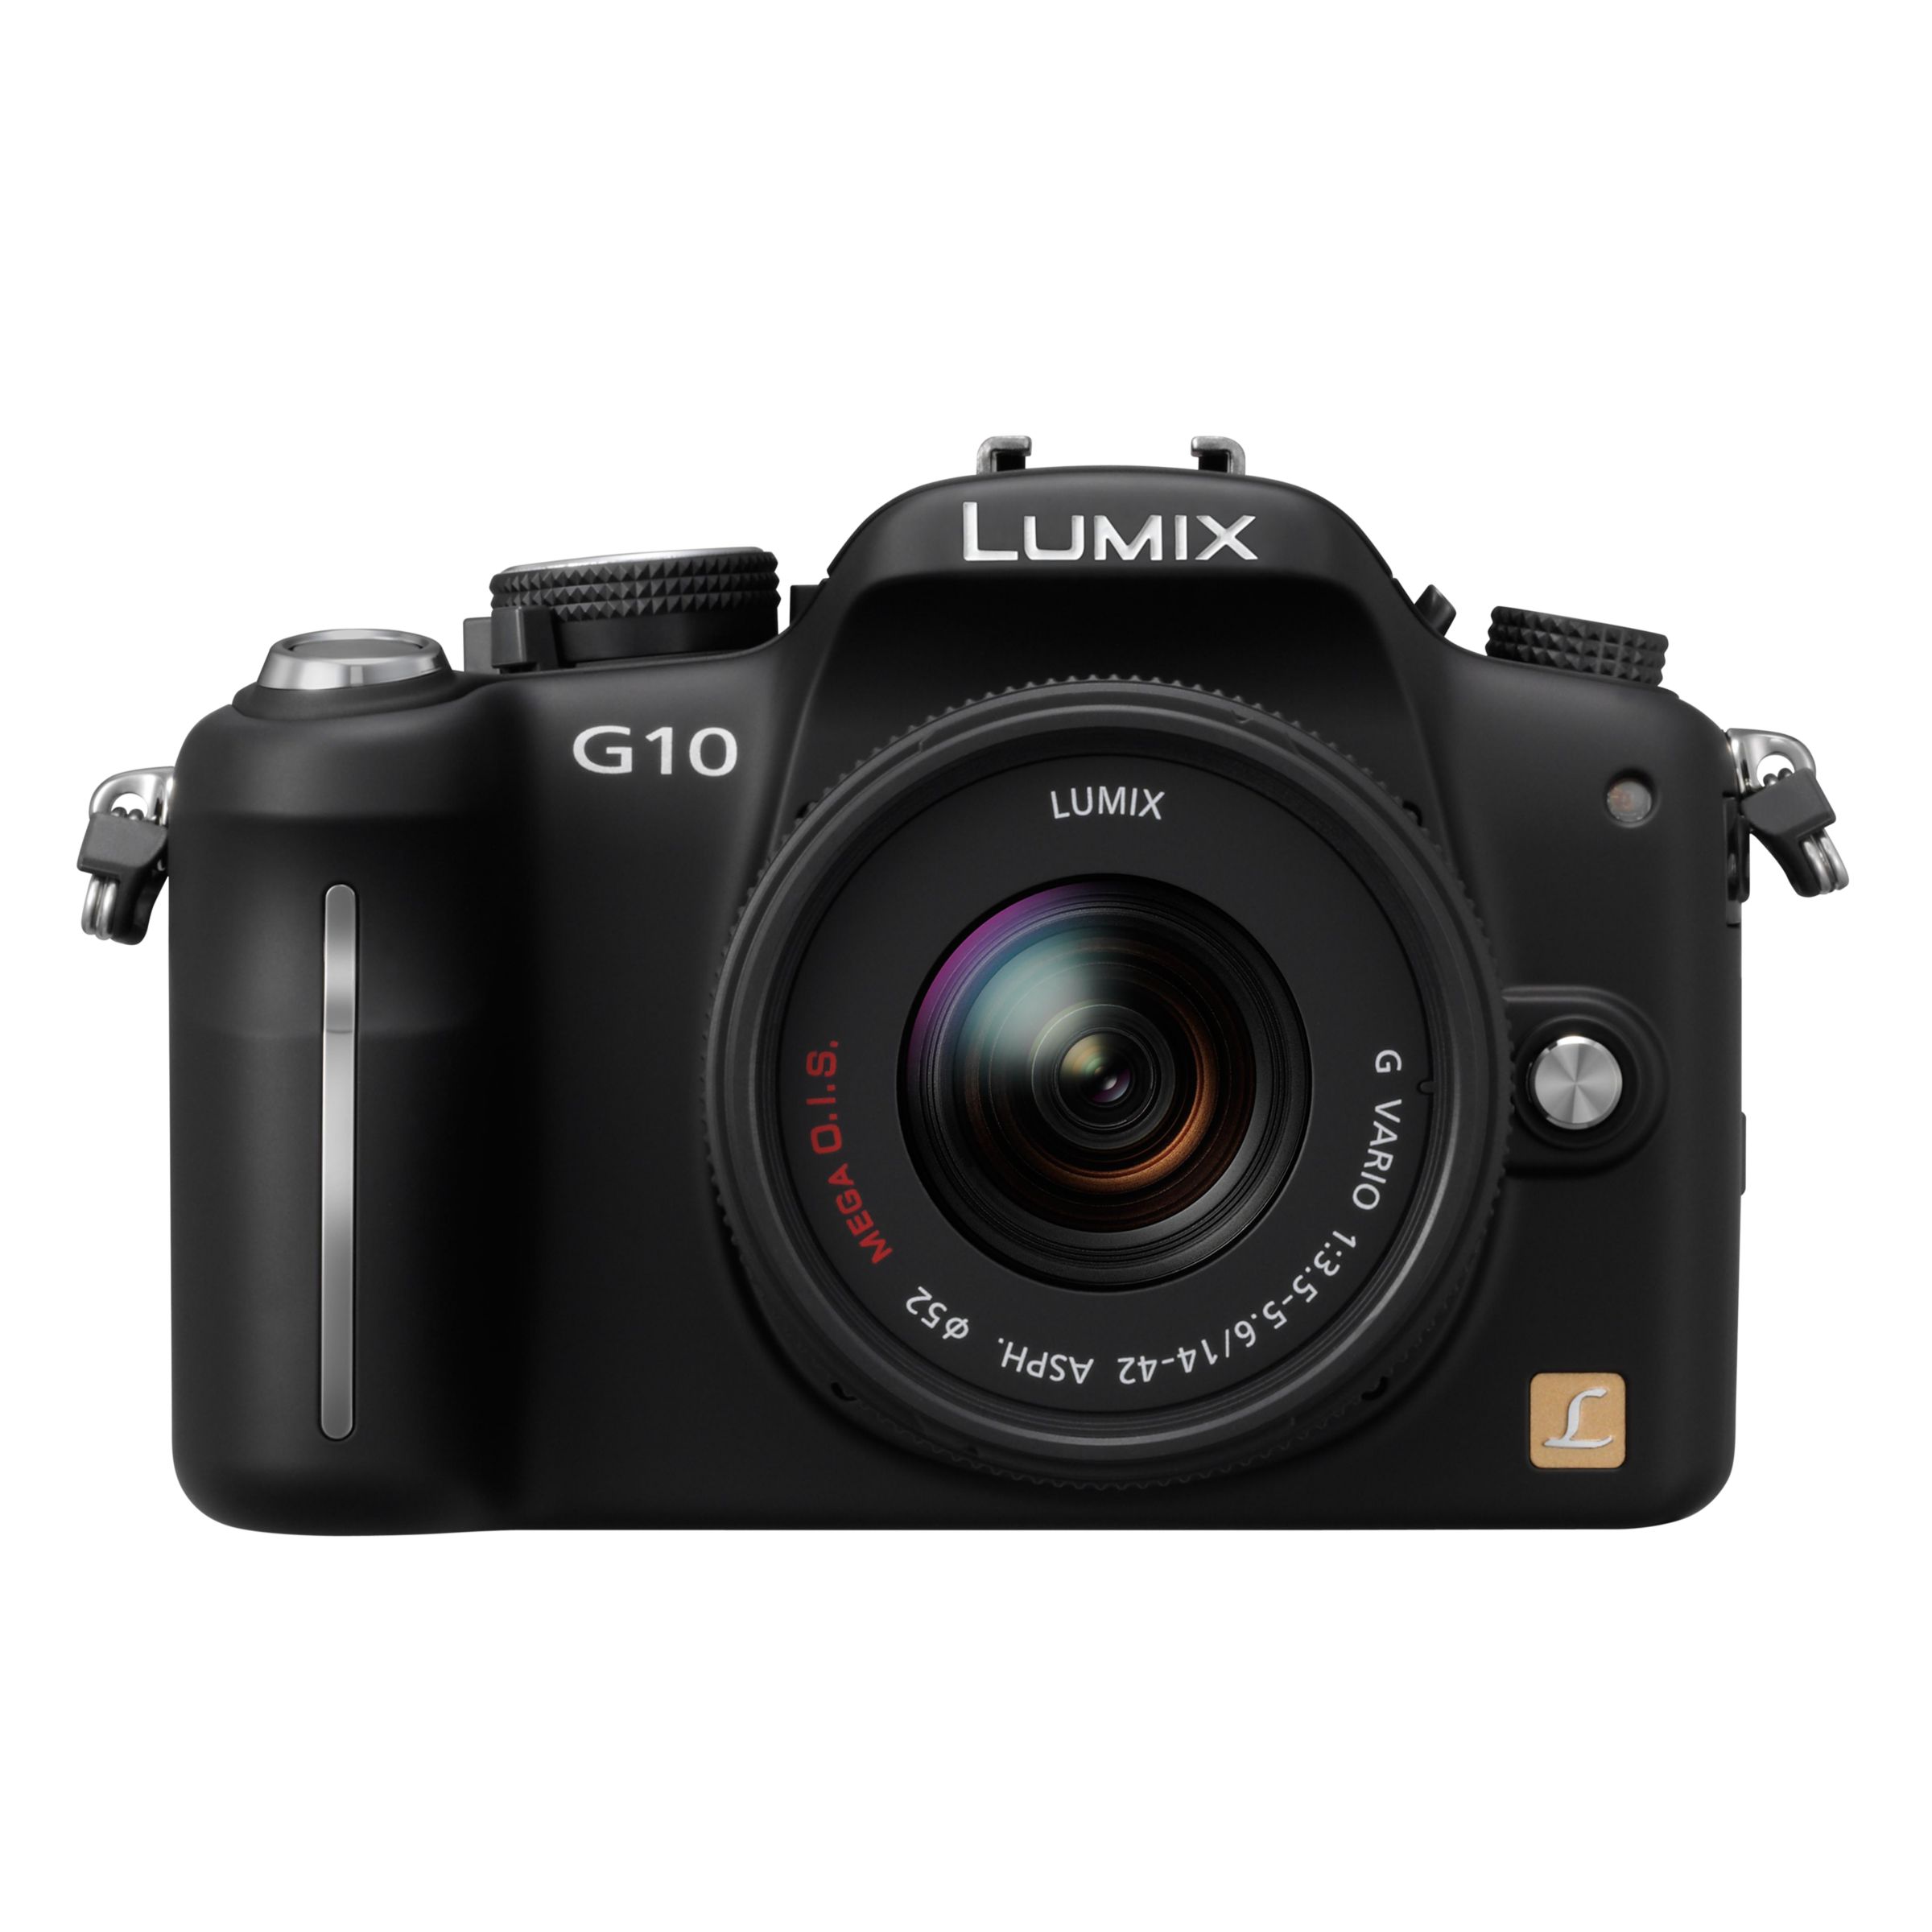 Panasonic Lumix G10 Micro Four Thirds Digital SLR Camera with 14-42mm Lens at John Lewis